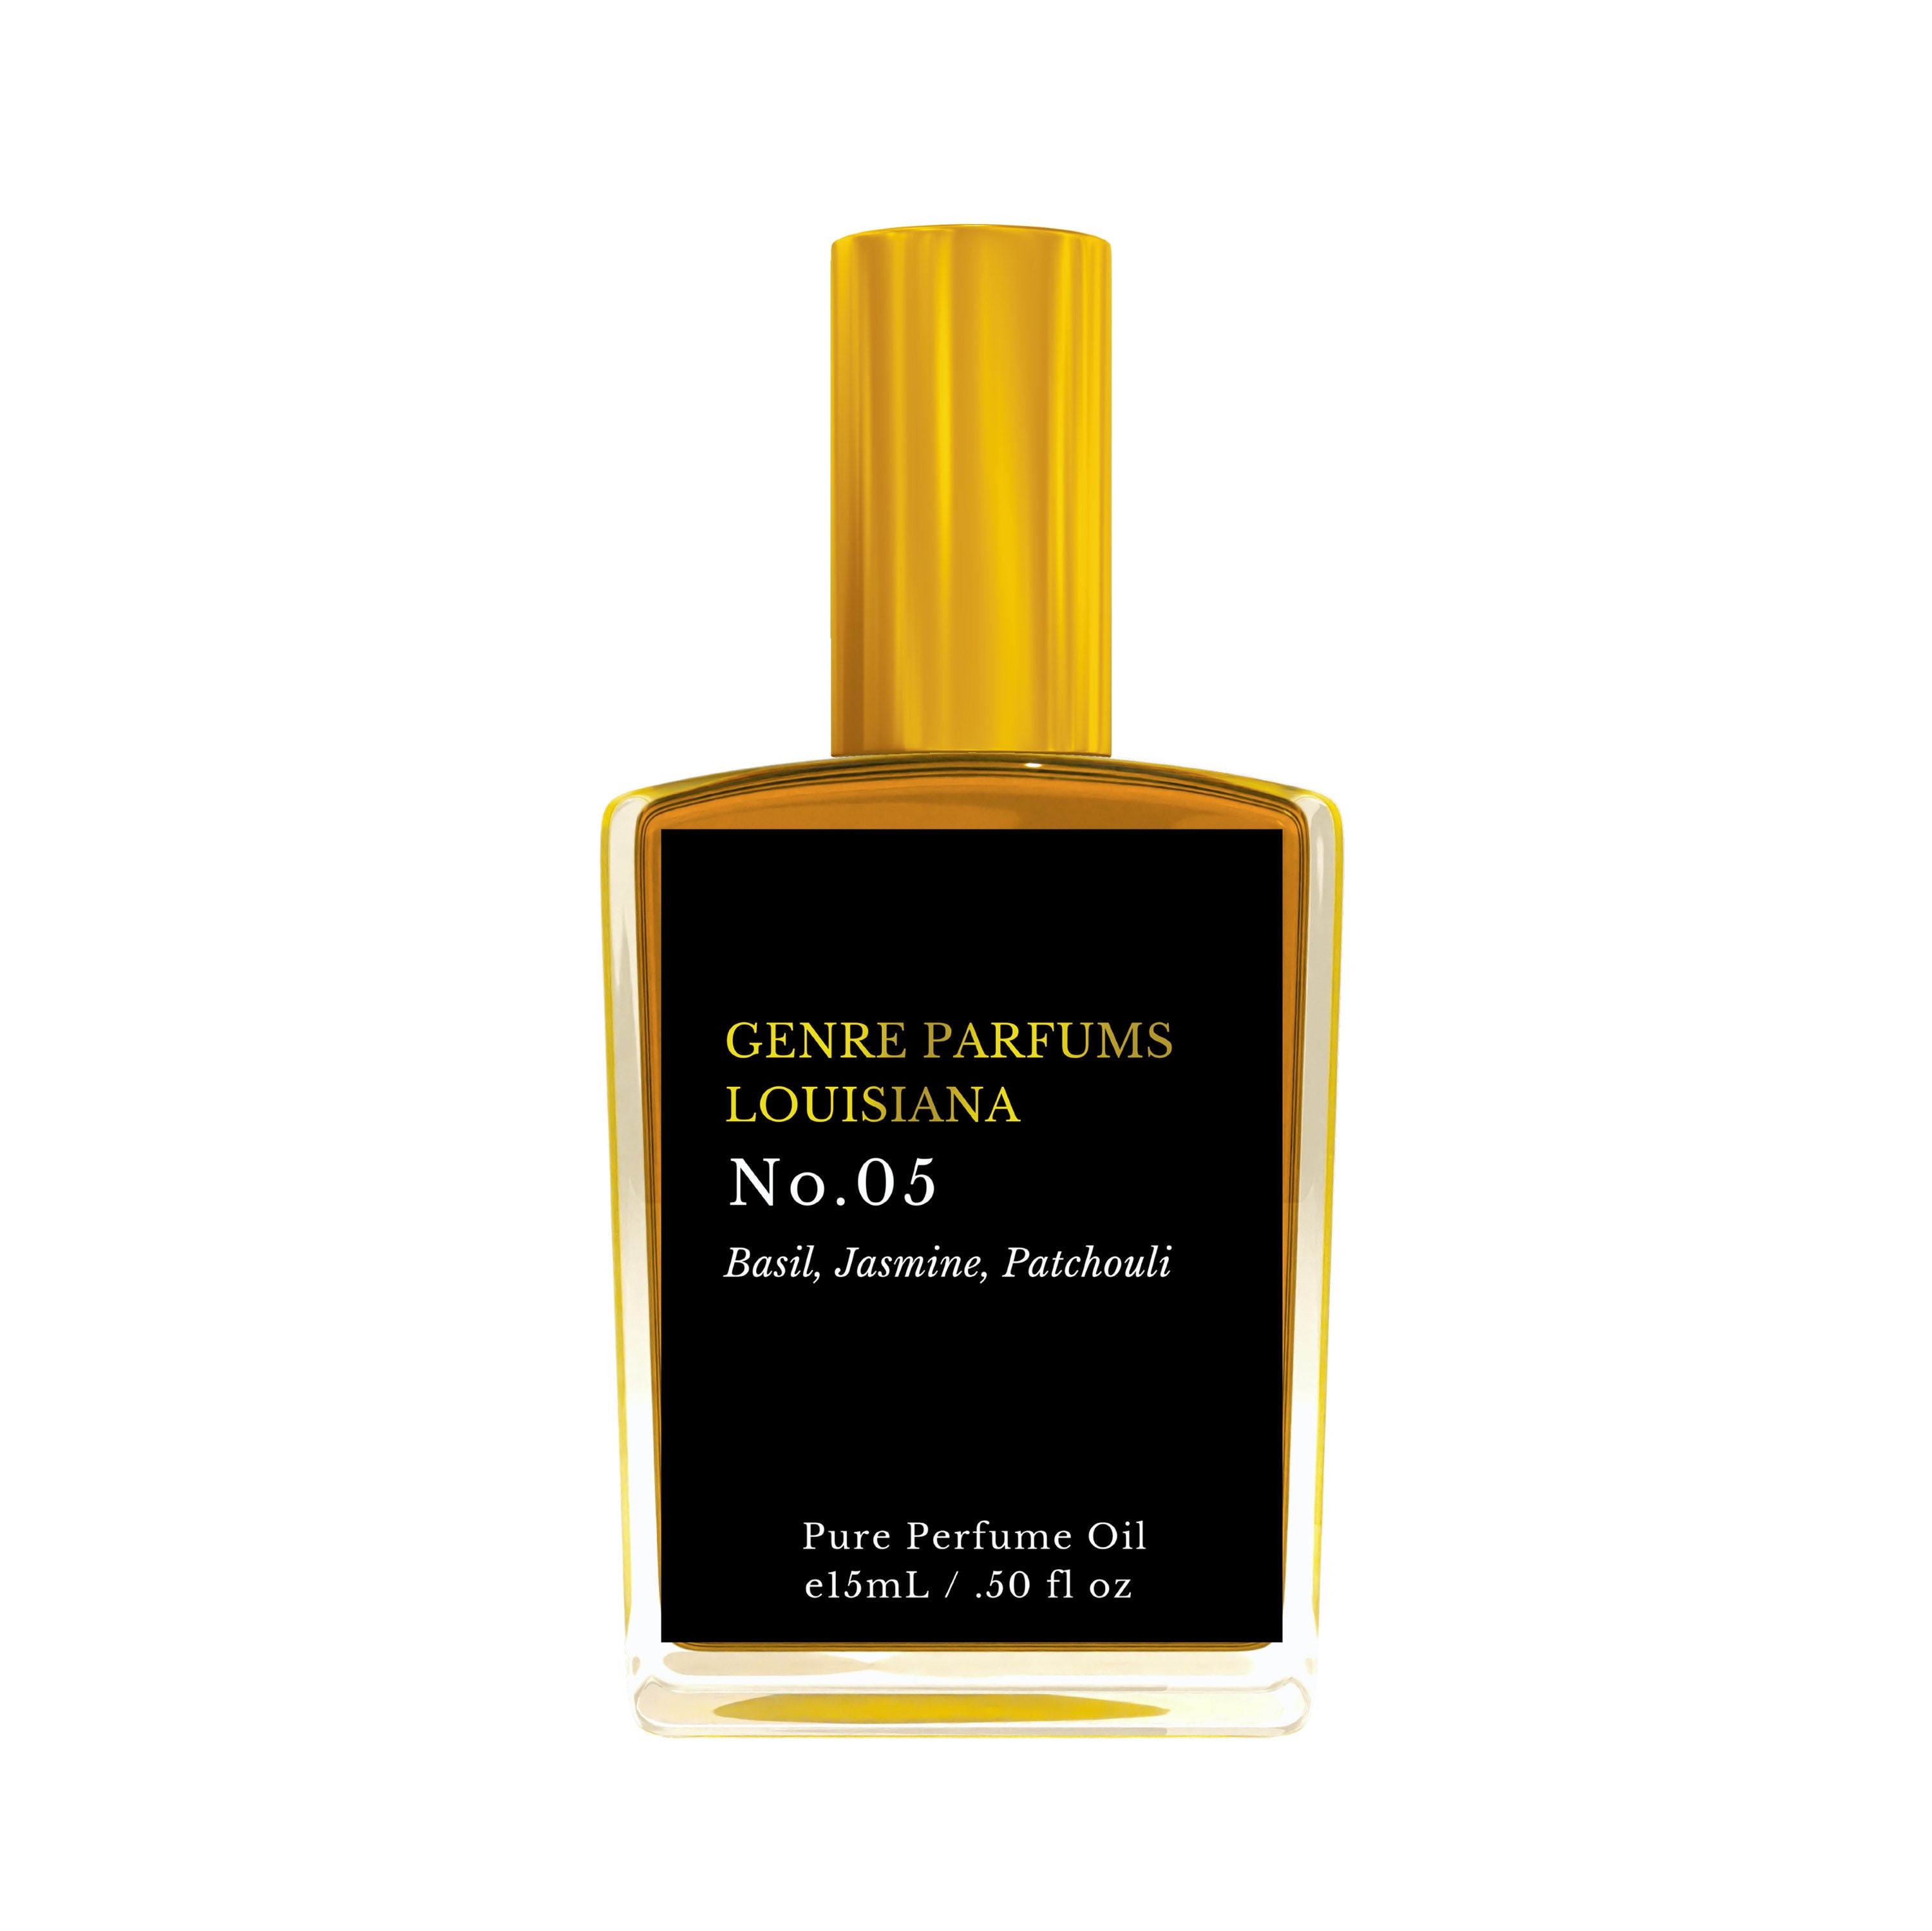 chanel 5 for women perfume spray